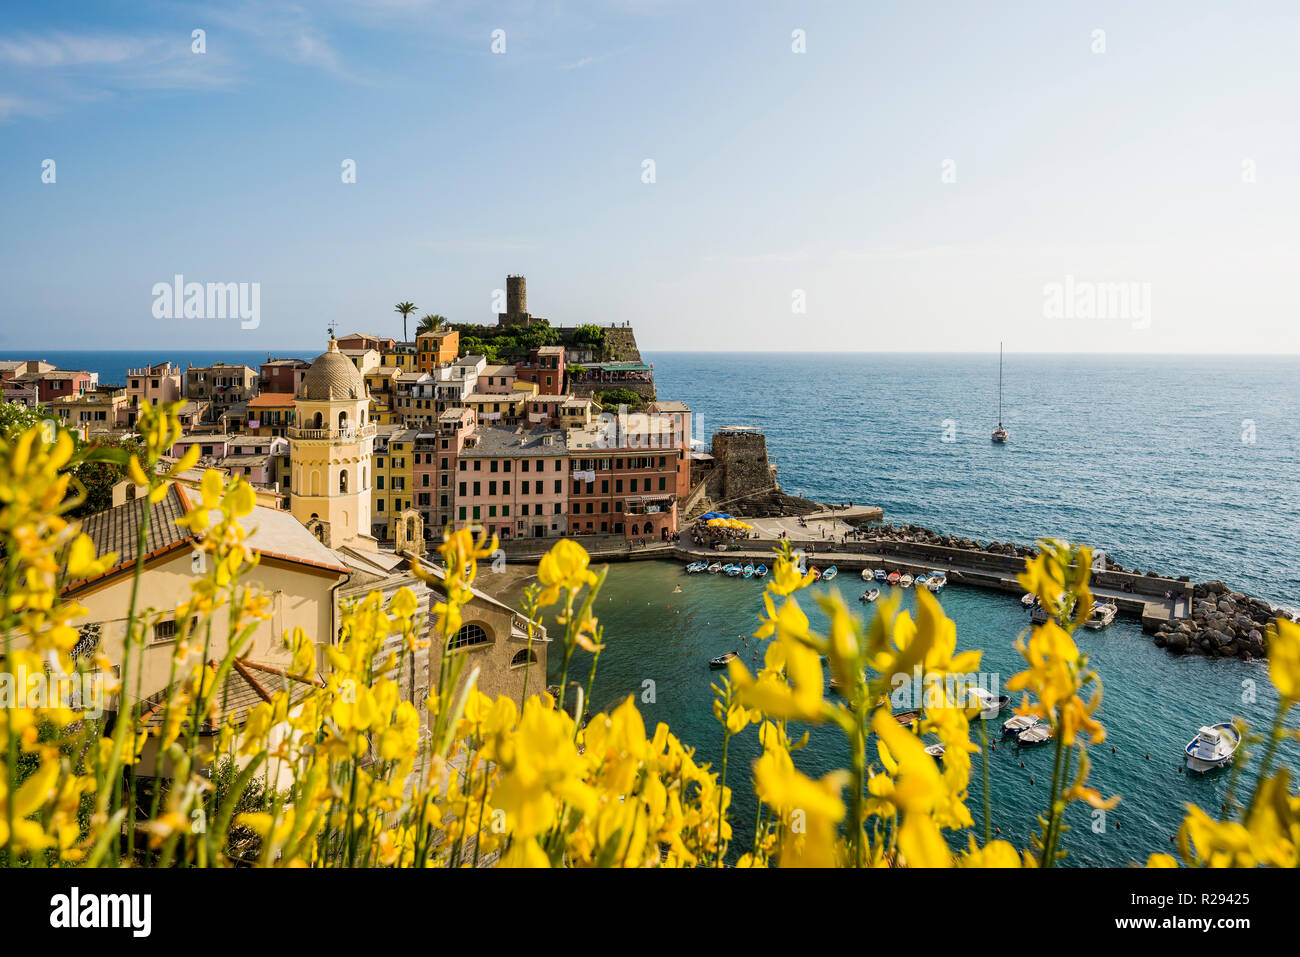 View of the village with colourful houses on the coast, Vernazza, UNESCO World Heritage Site, Cinque Terre, Riviera di Levante Stock Photo